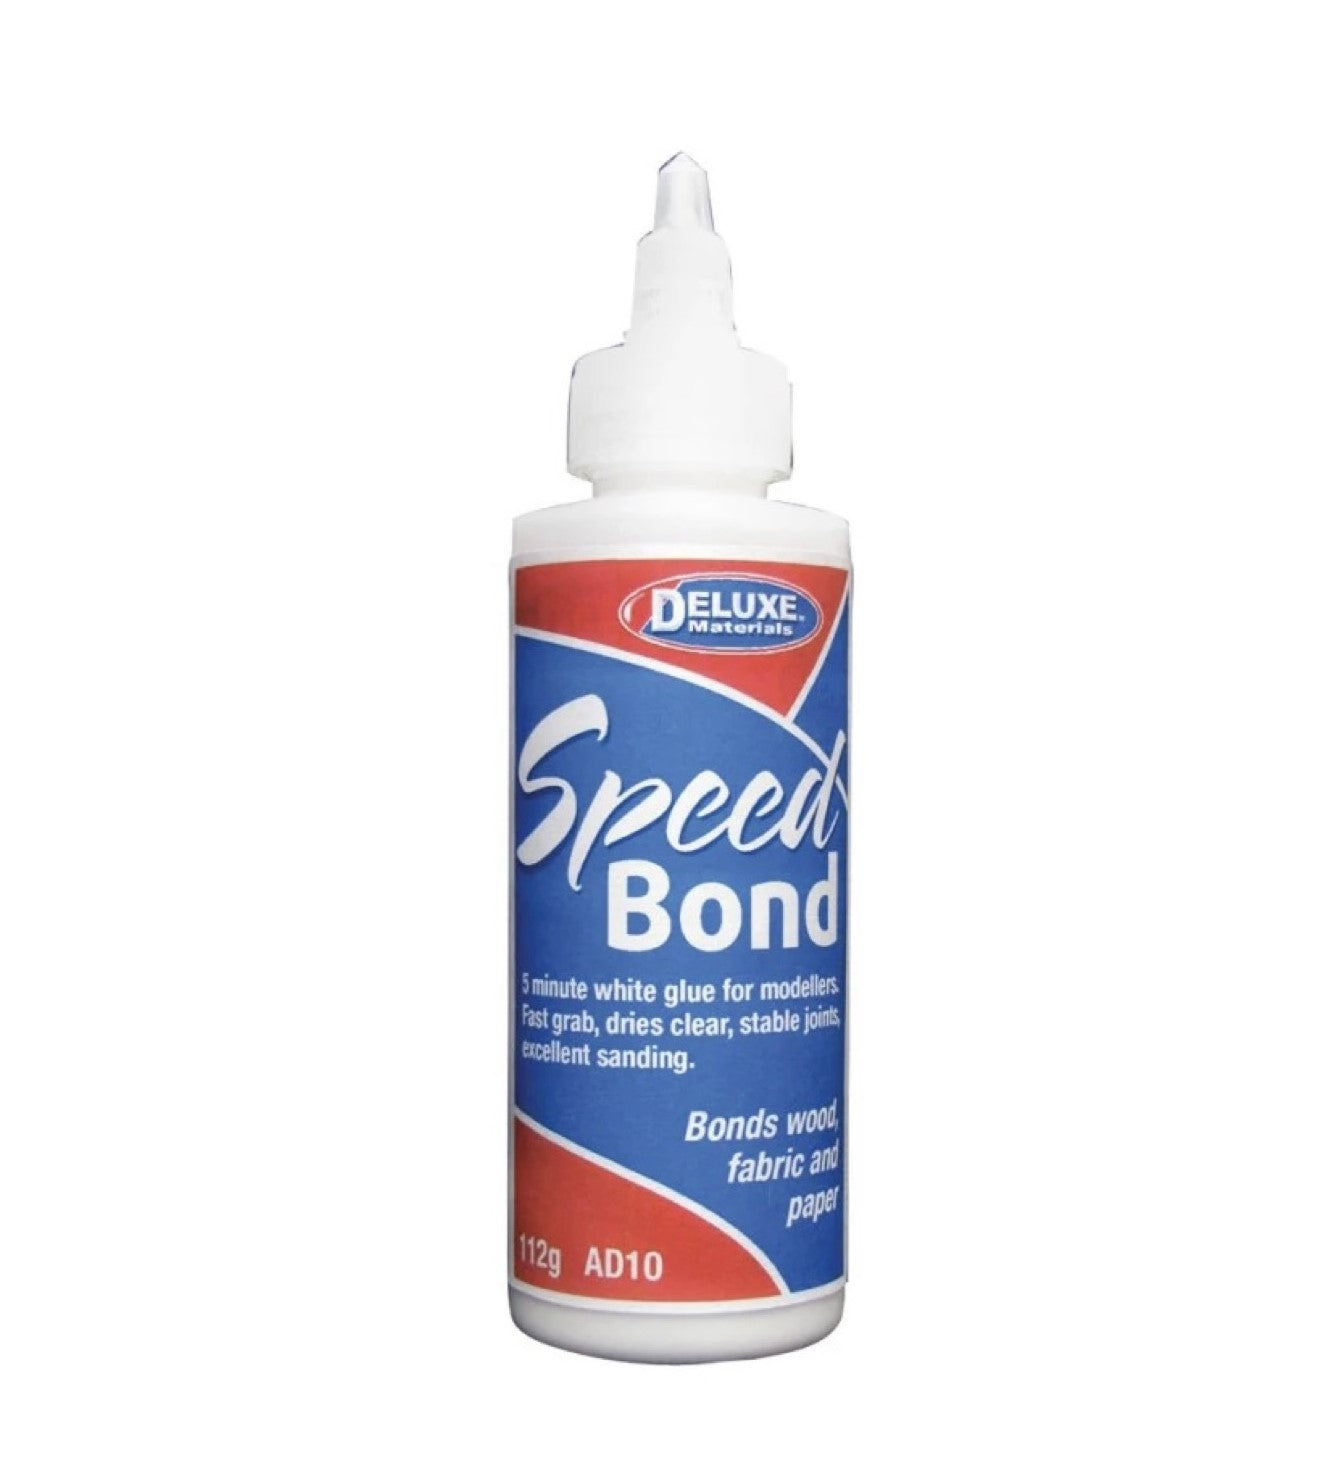 AD10 - Speed Bond (Glue) 112g